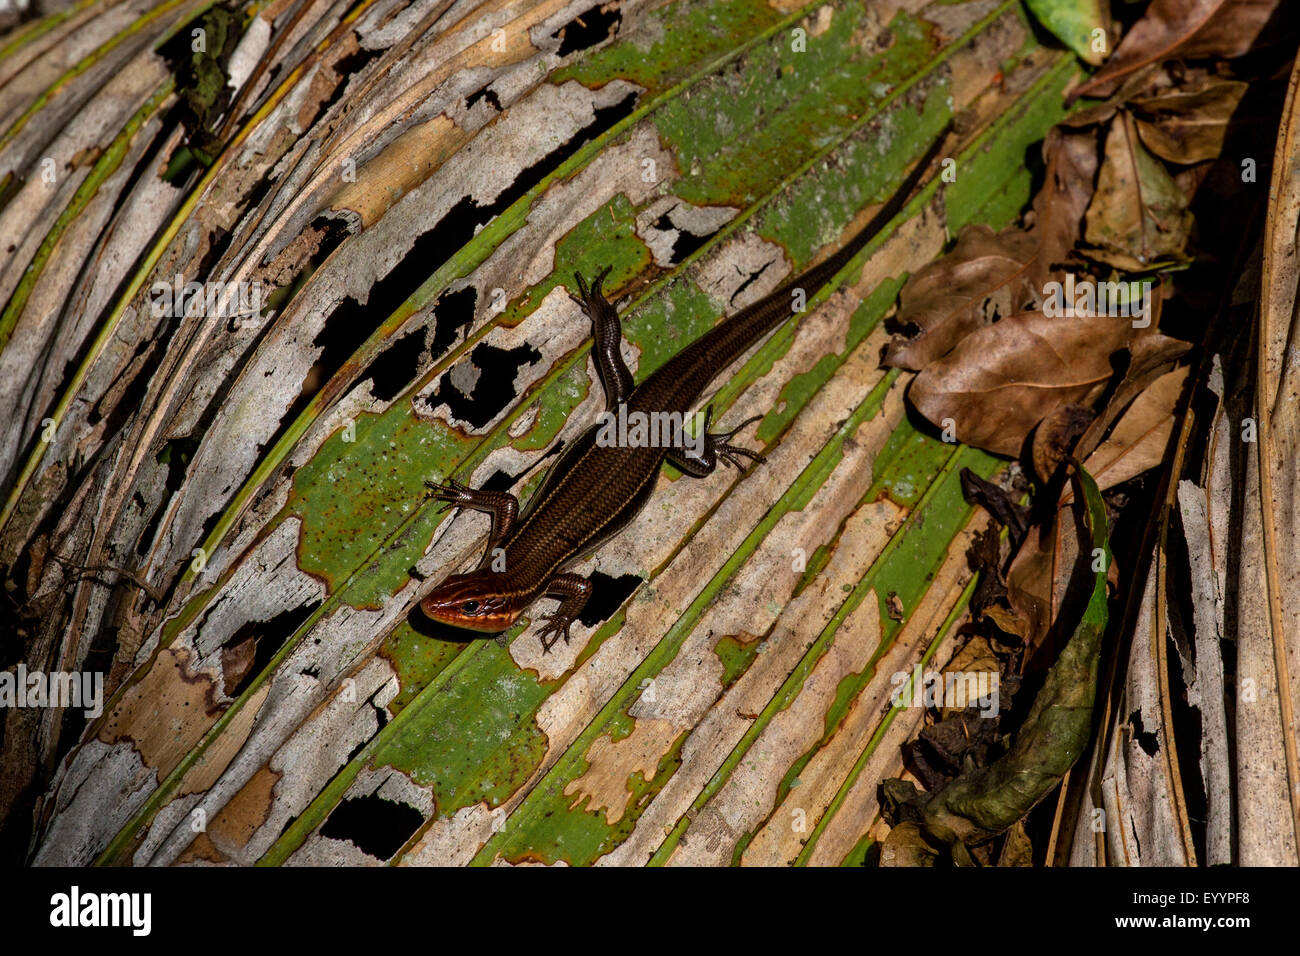 Mole Bluetail skink (cf. Plestiodon egregius lividus ), sobre una hoja, Kissimmee, Florida, EE.UU. Foto de stock